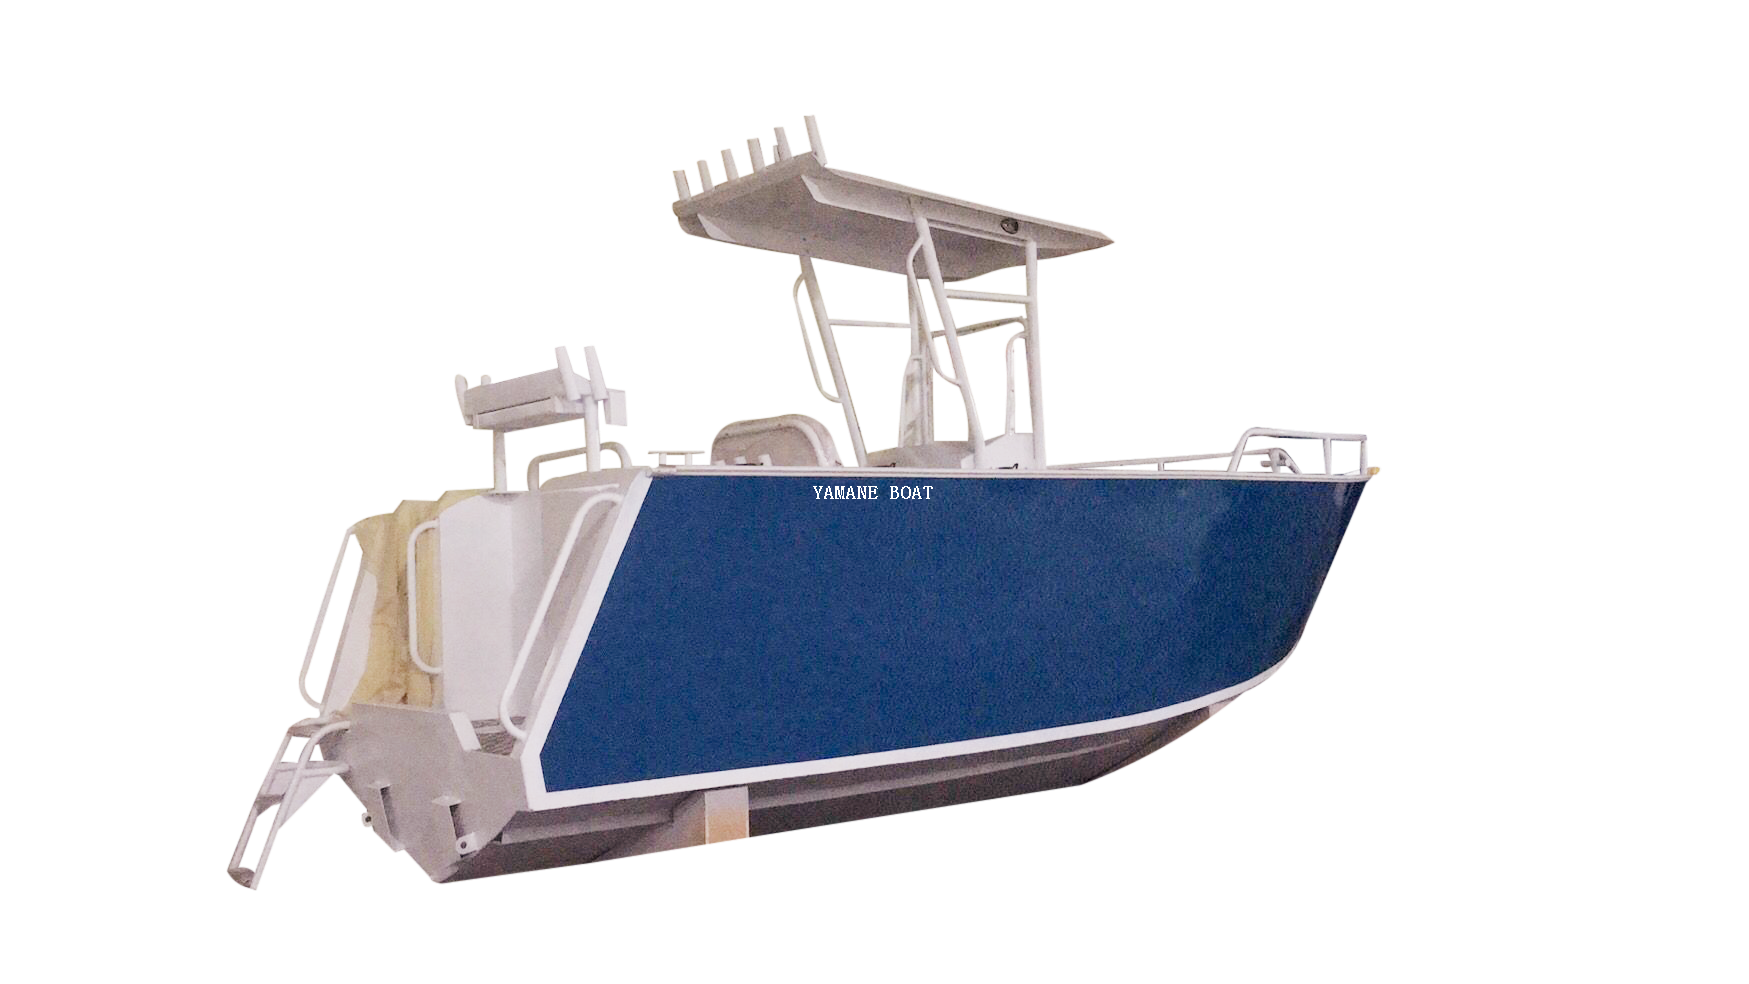 Barco de aluminio de alta calidad con chorro de arena en alta mar